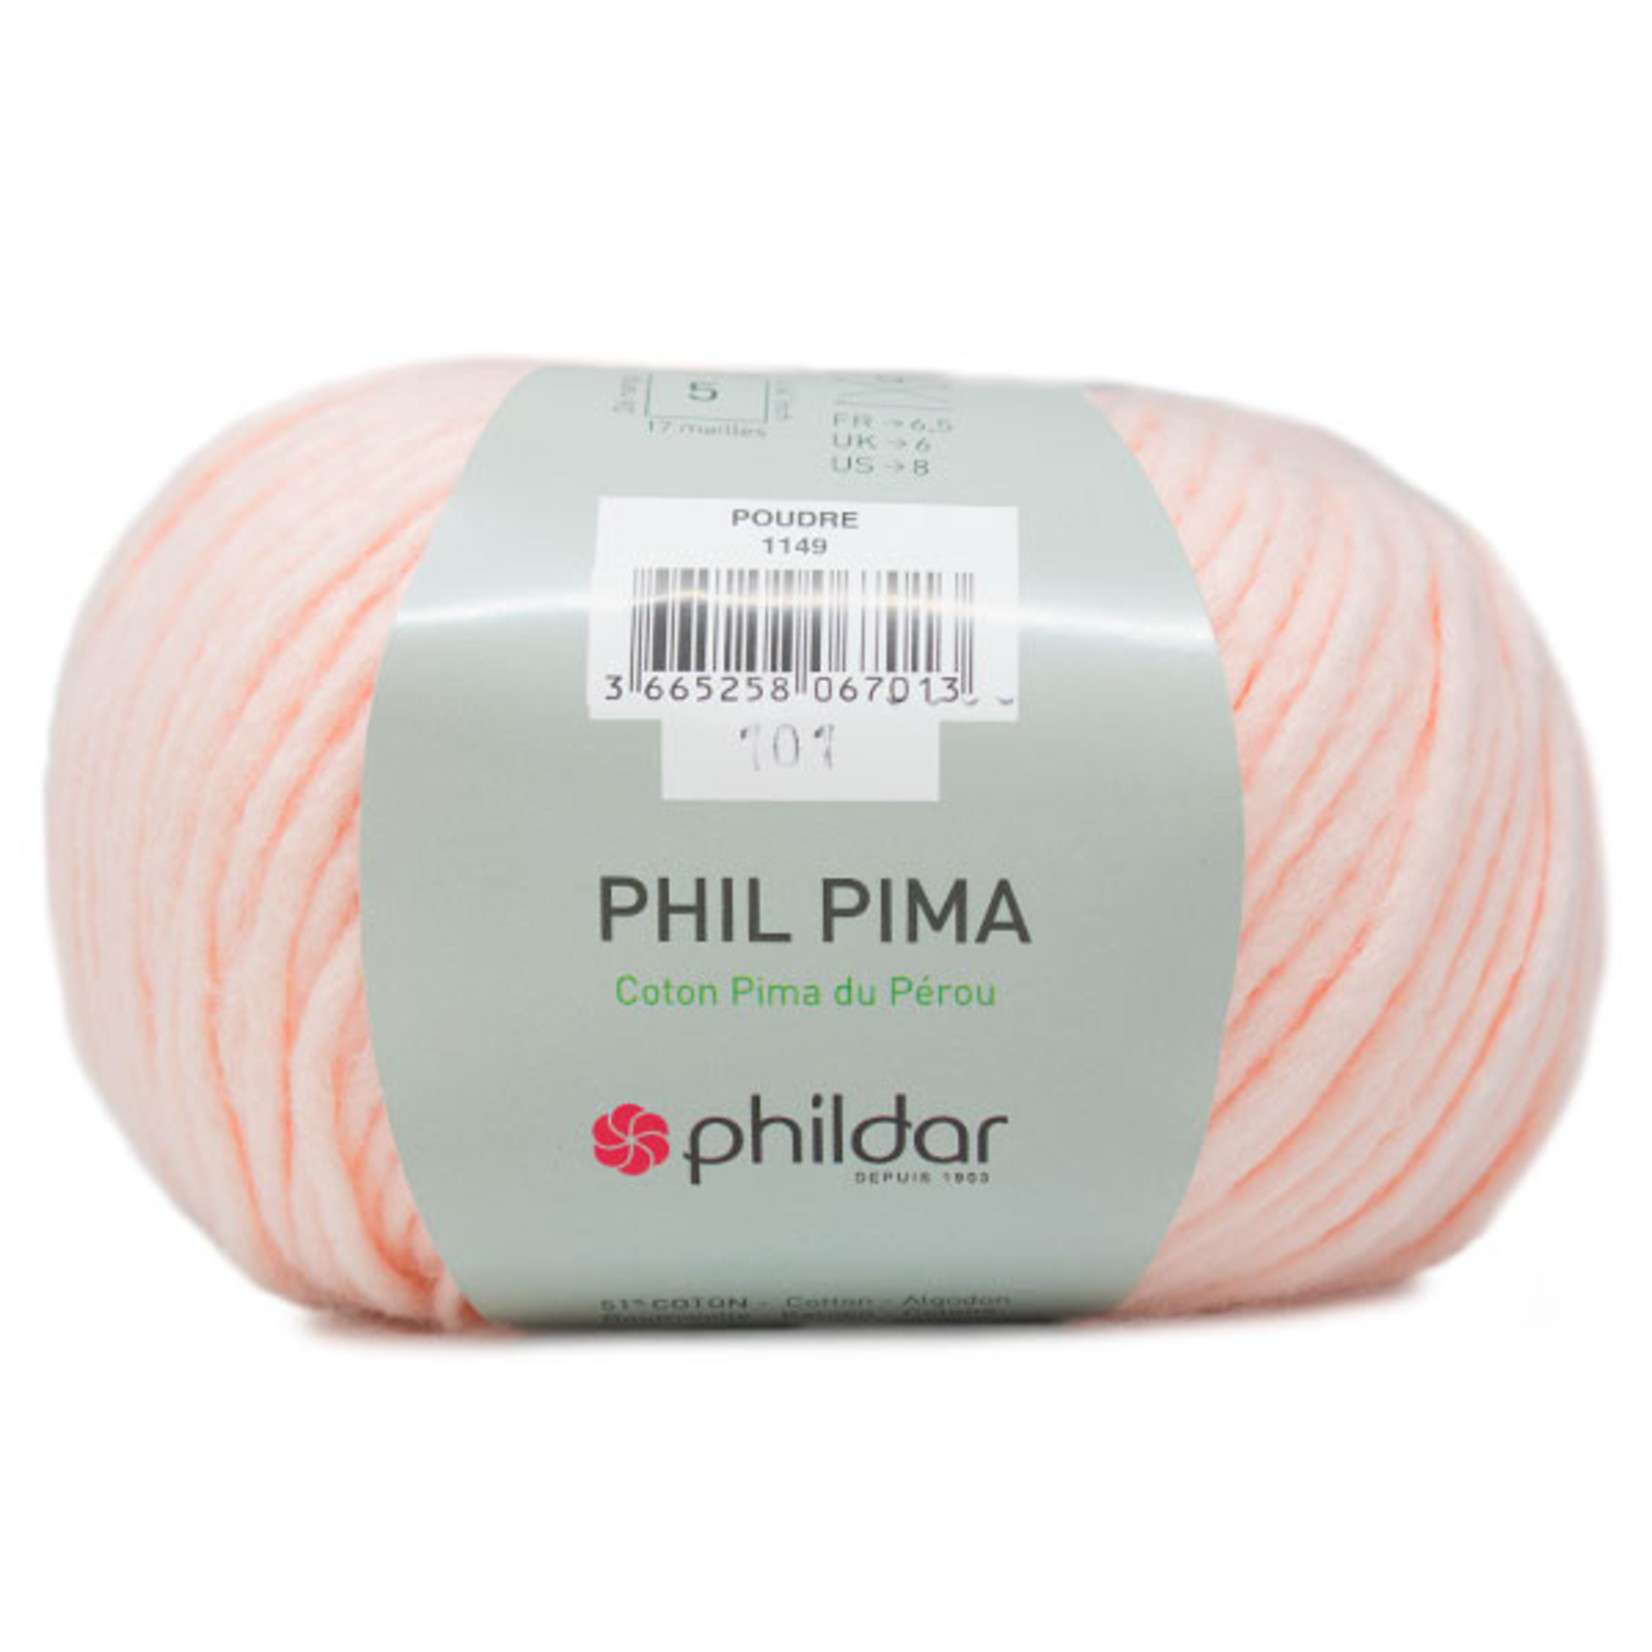 Phildar Phil Pima Poudre